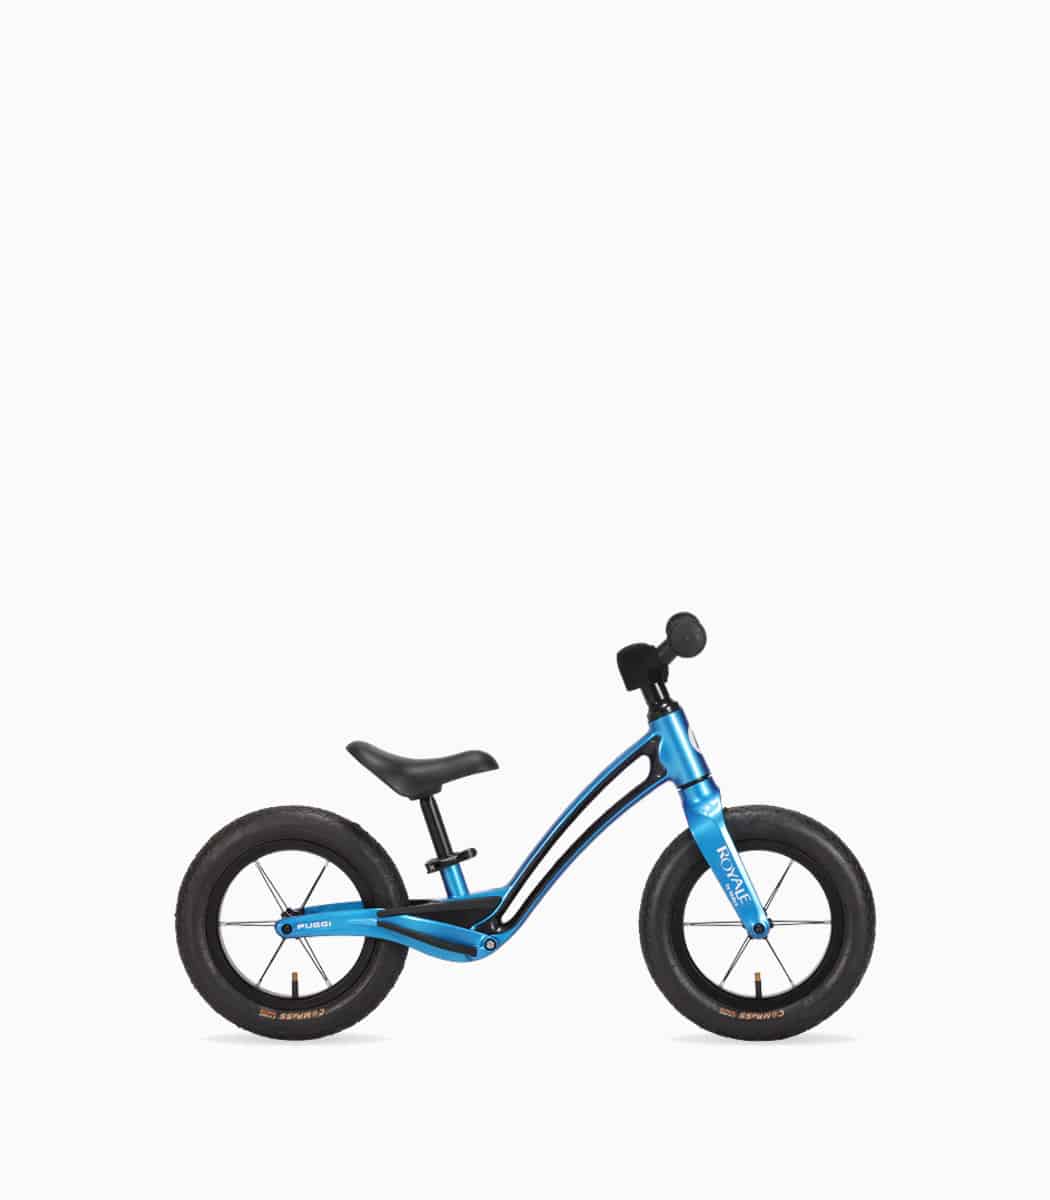 ROYALE Puggi (BLUE) kids balance bike right